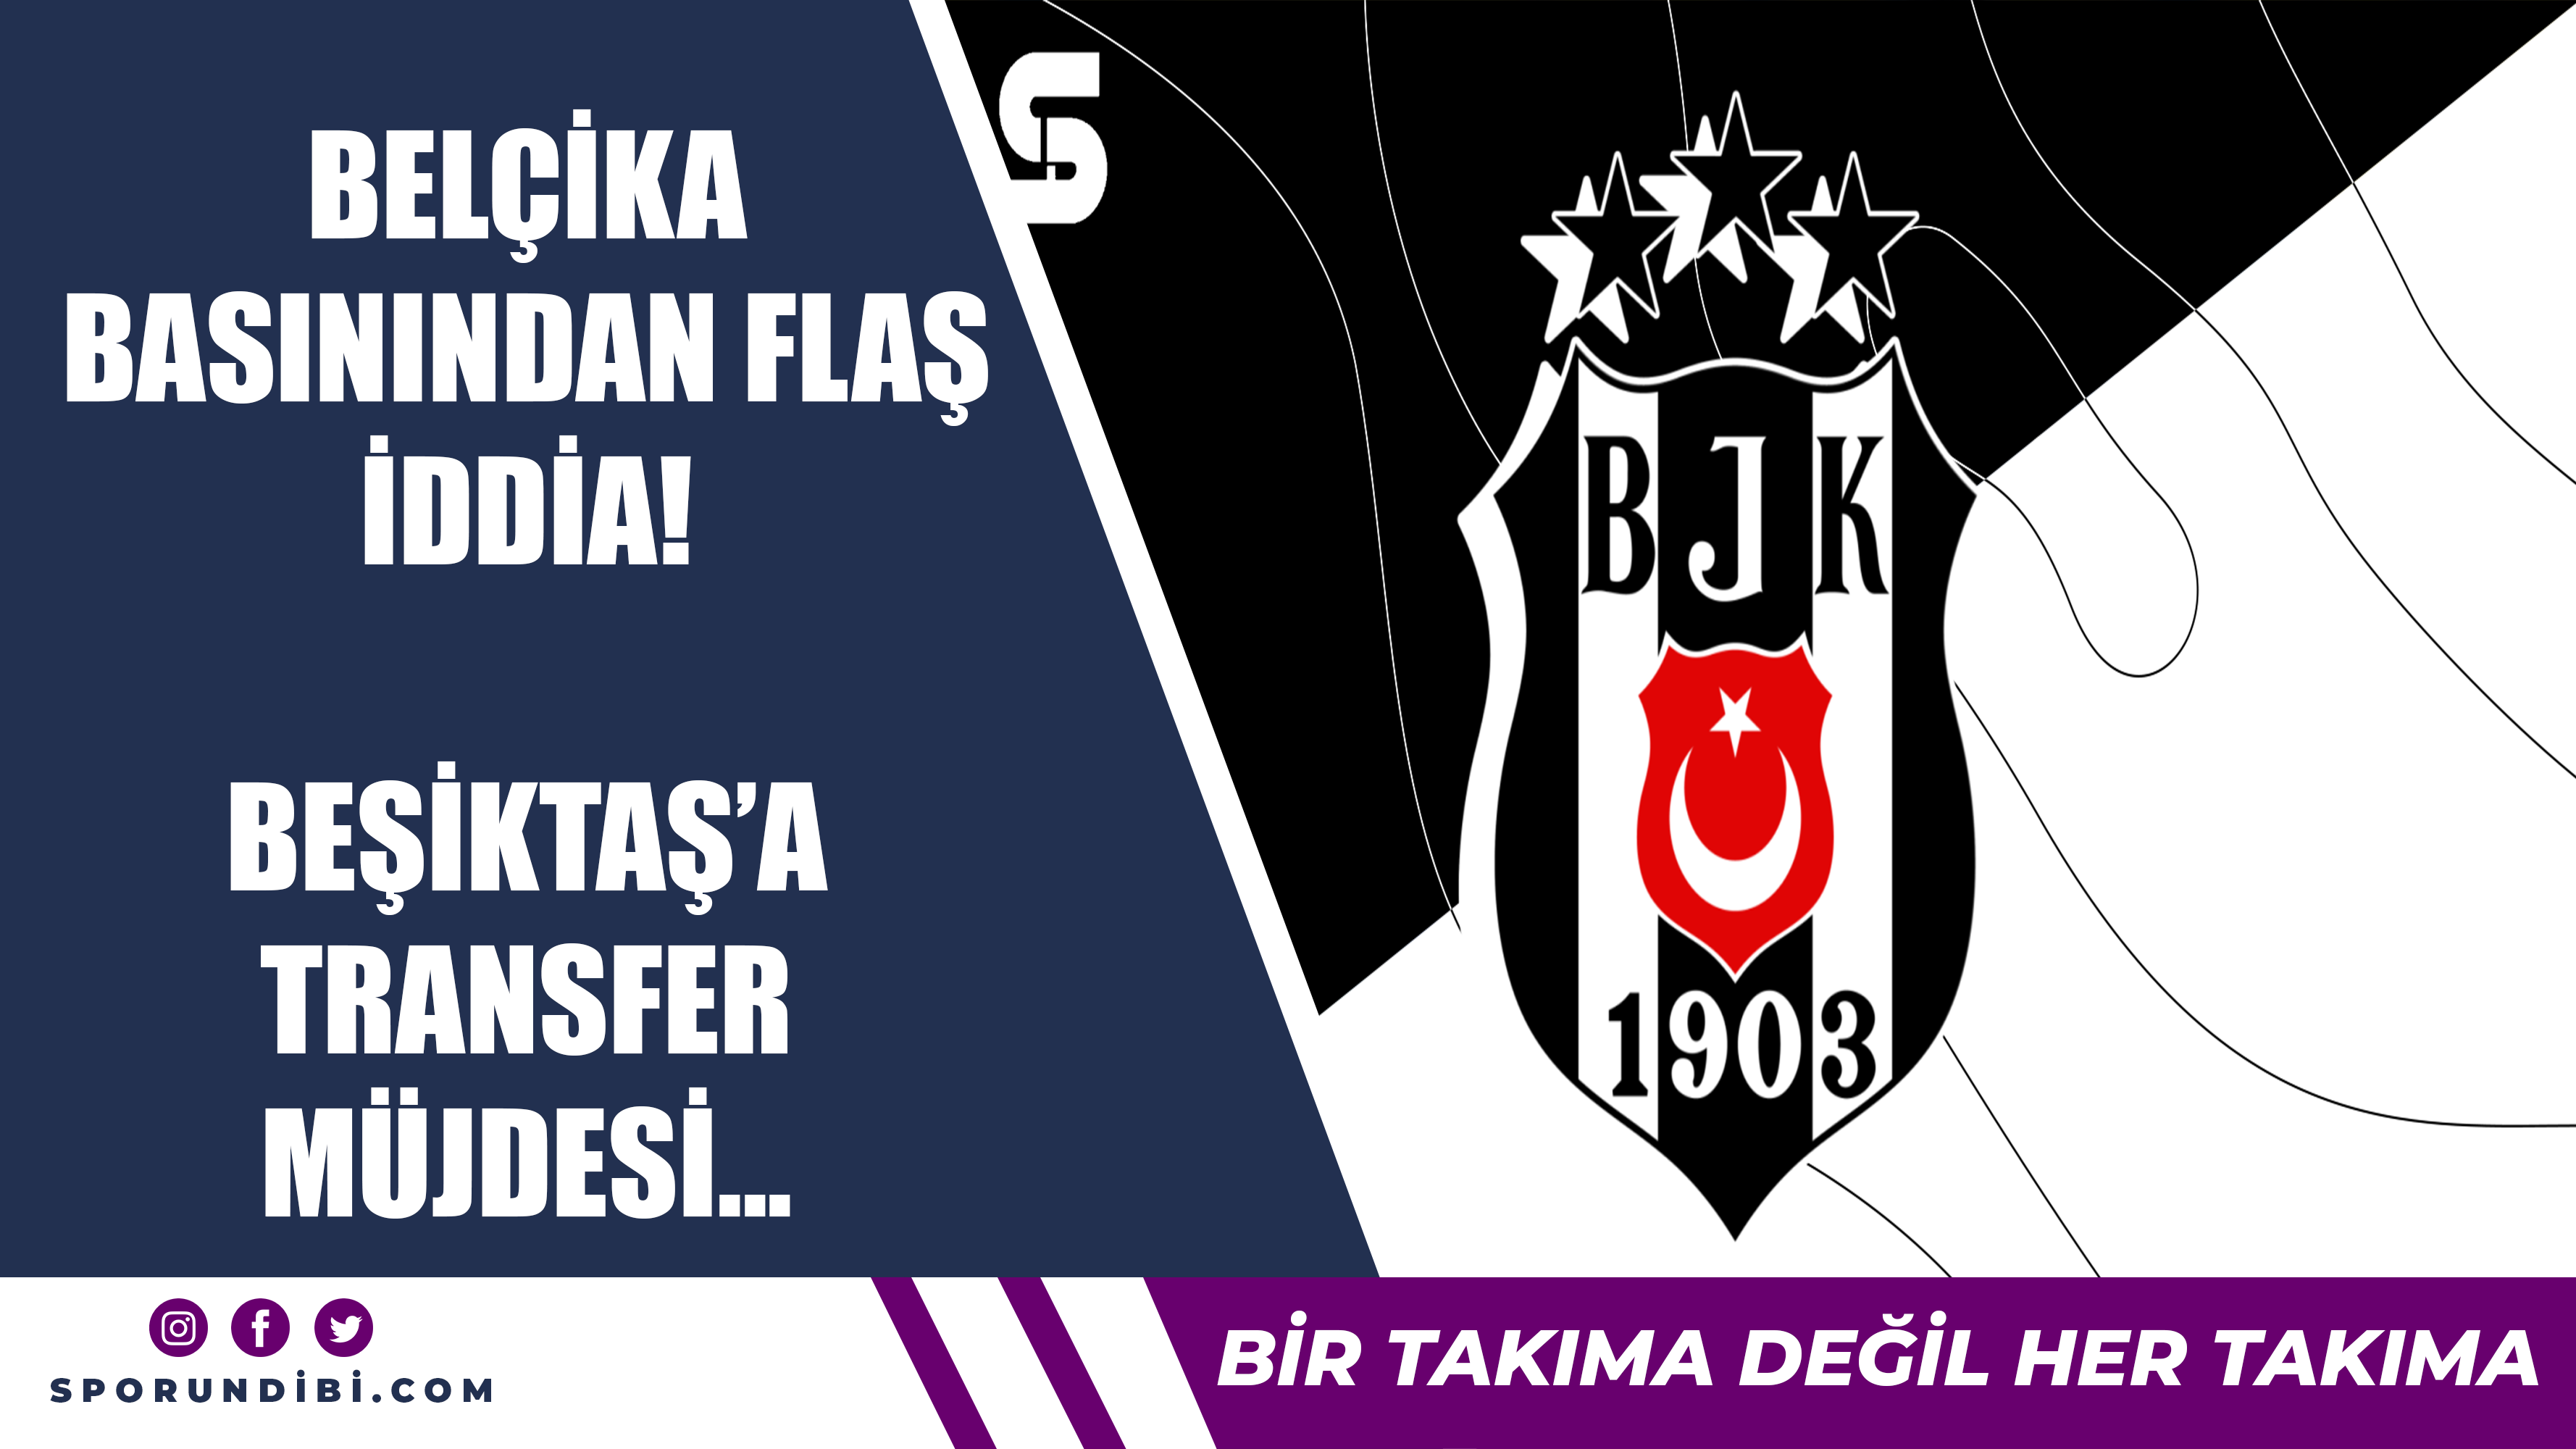 Belçika basınından flaş iddia! Beşiktaş'a transfer müjdesi...